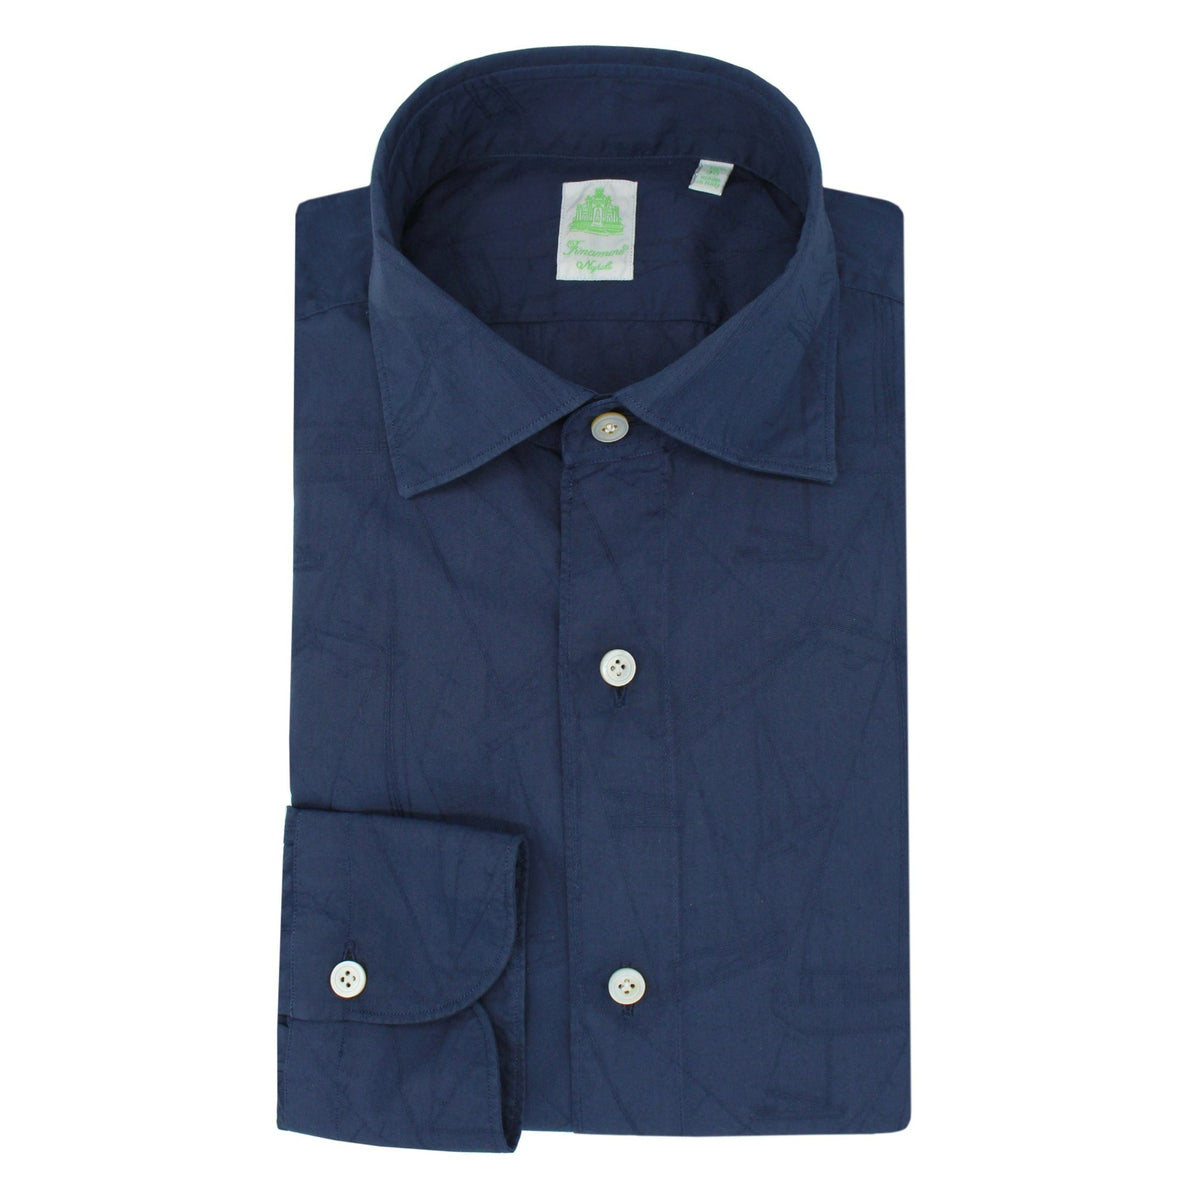 Tokyo slim fit shirt garment dyed jacquard fabric